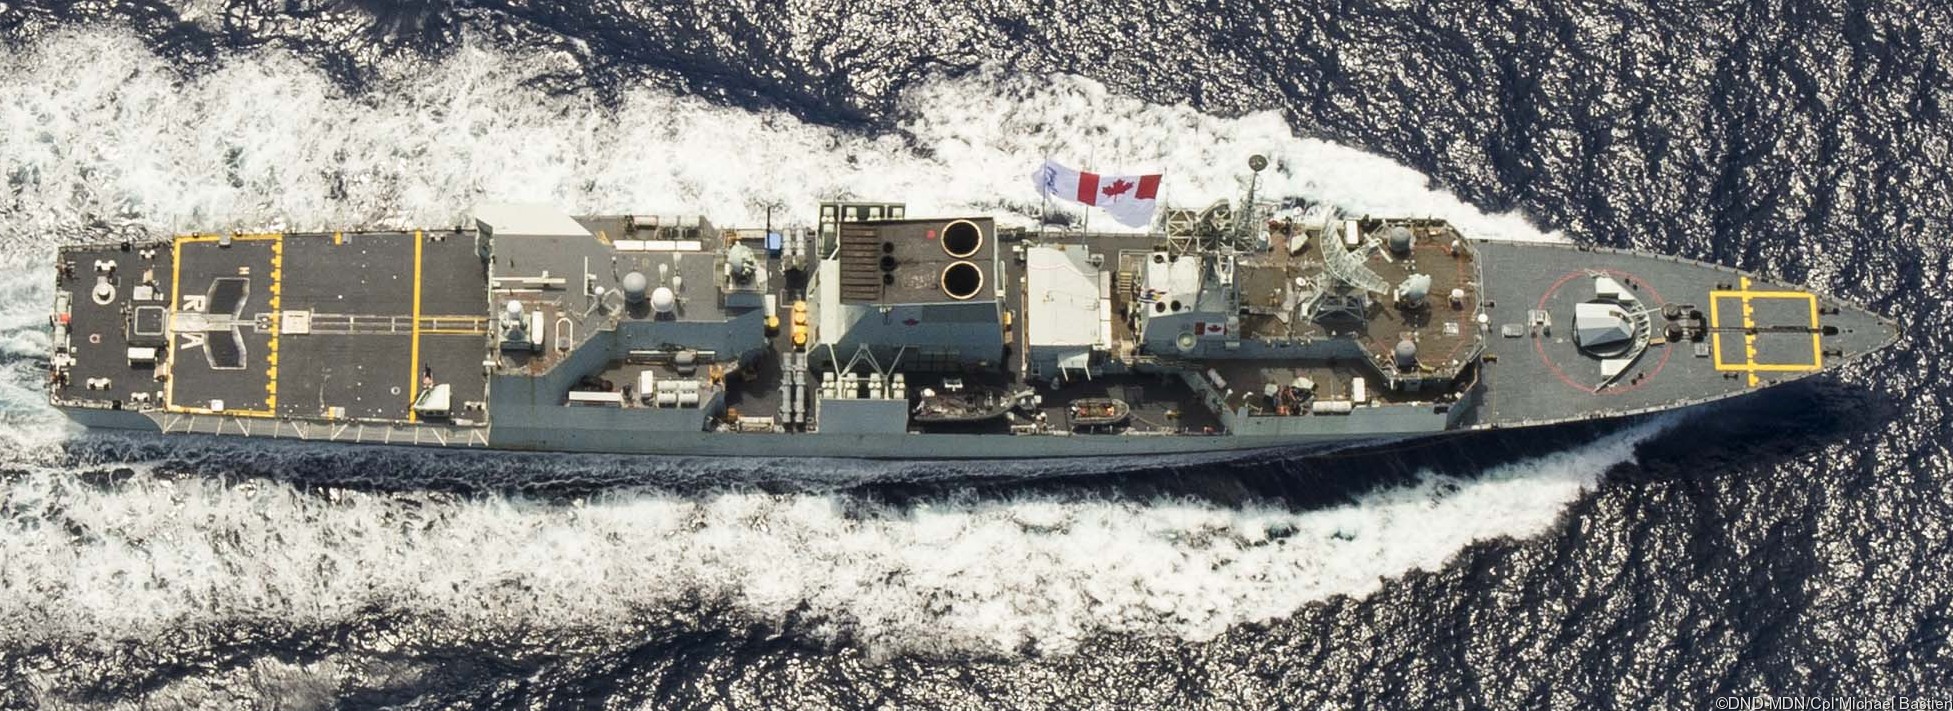 ffh-334 hmcs regina halifax class helicopter patrol frigate ncsm royal canadian navy 02